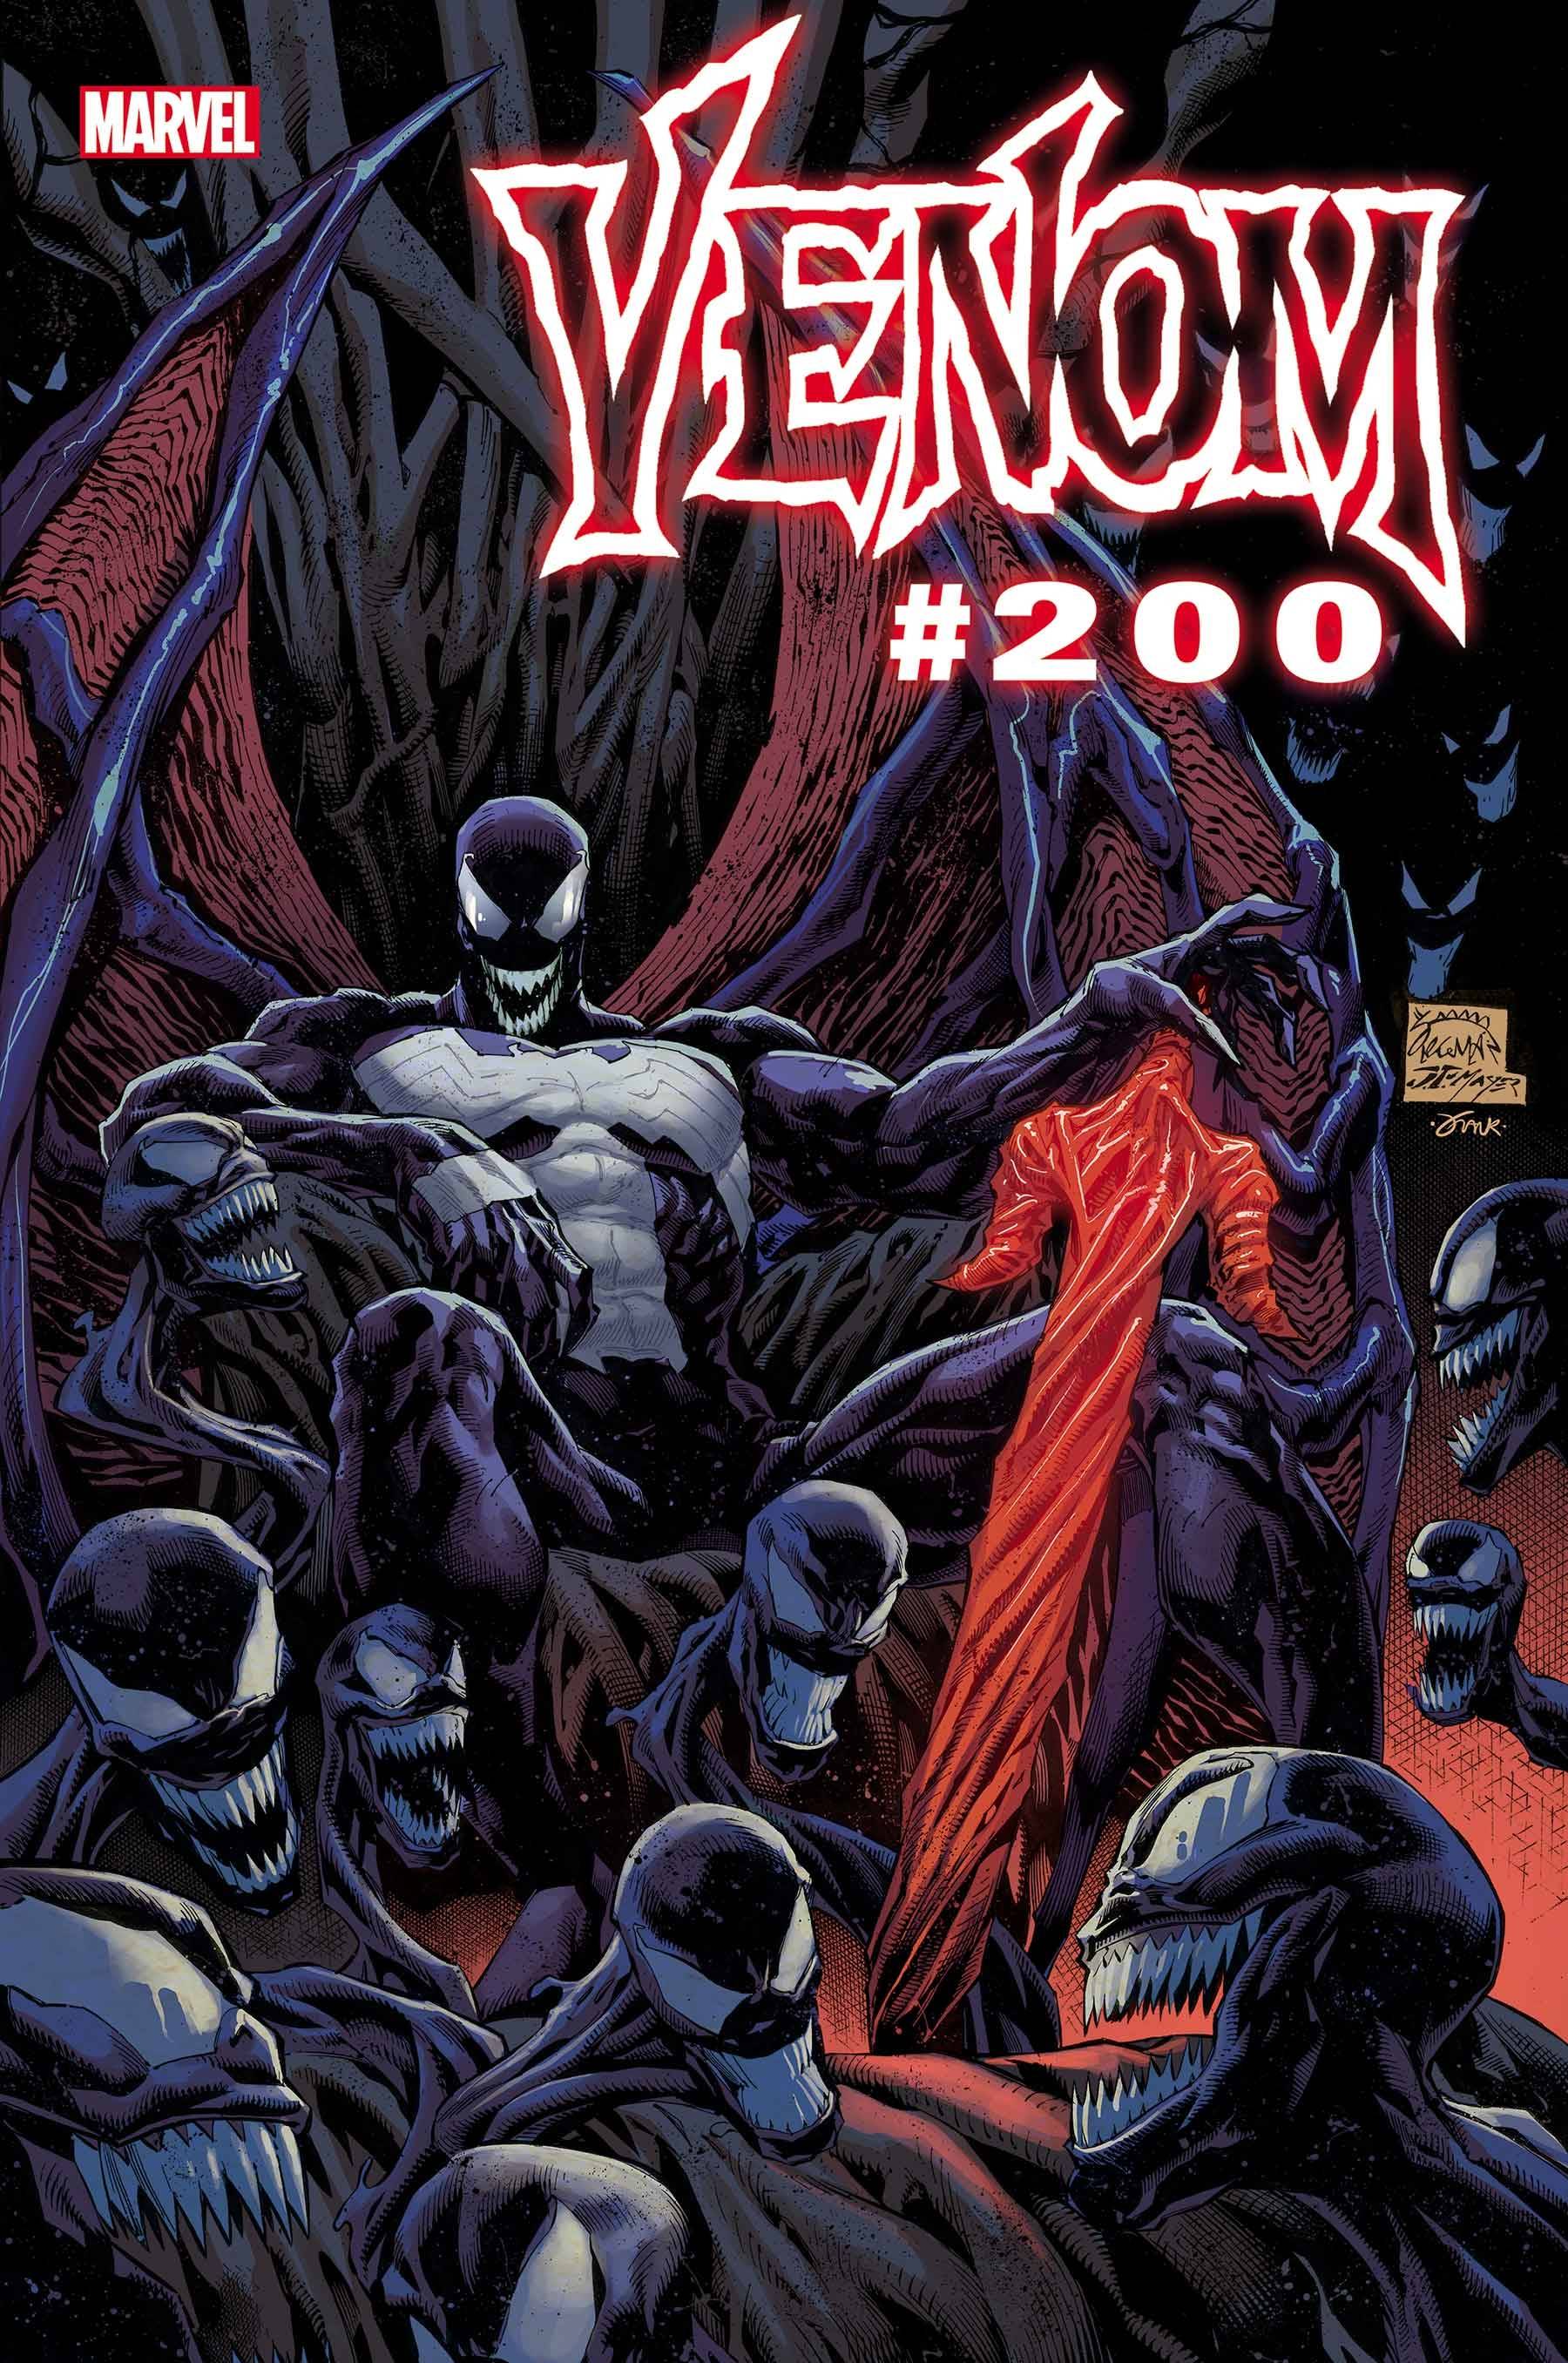 Venom #200 Poster